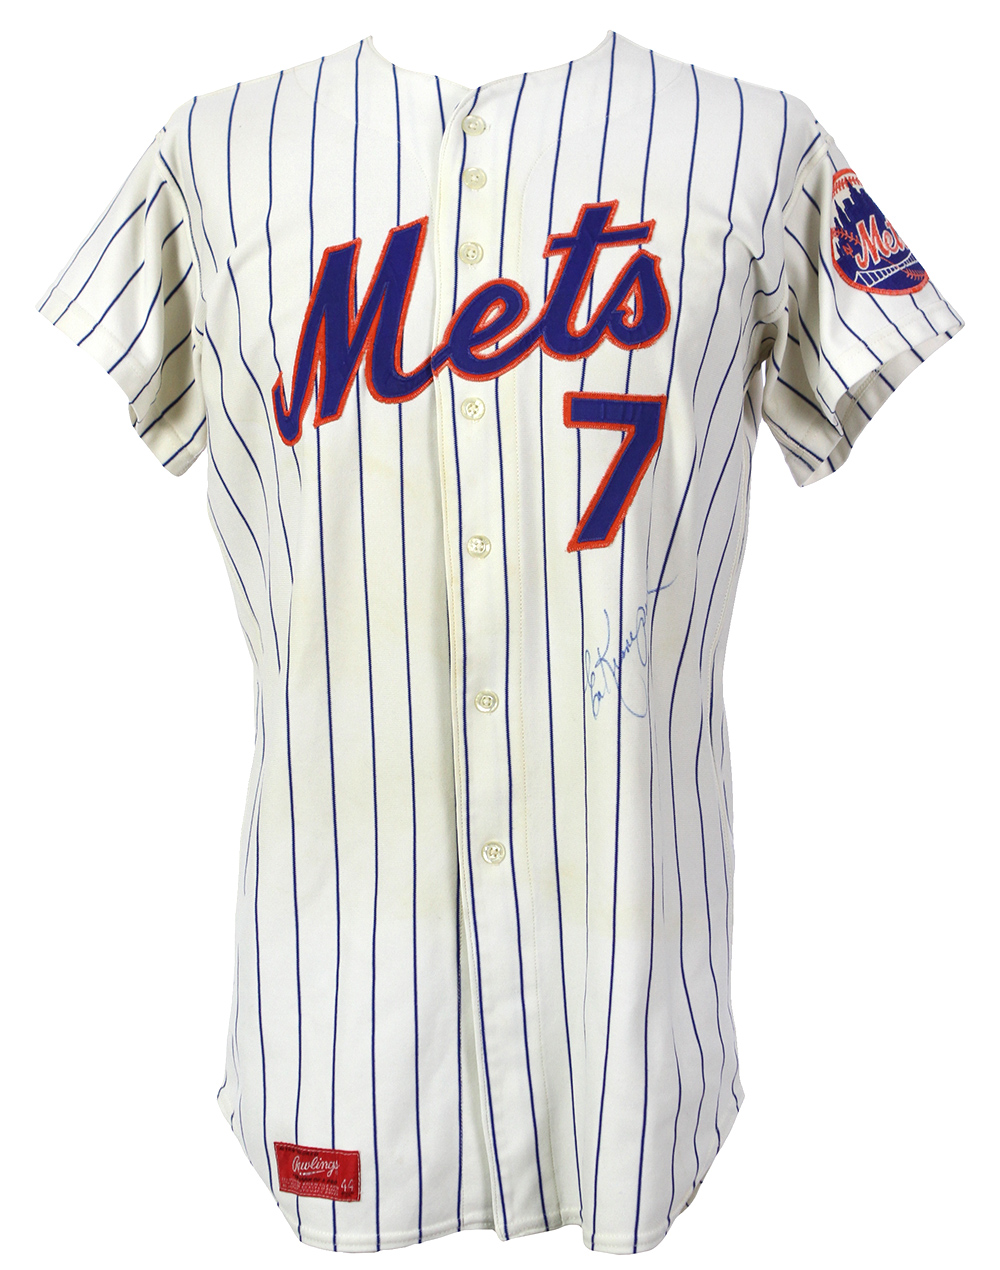 1978 New York Mets Game Worn Jersey